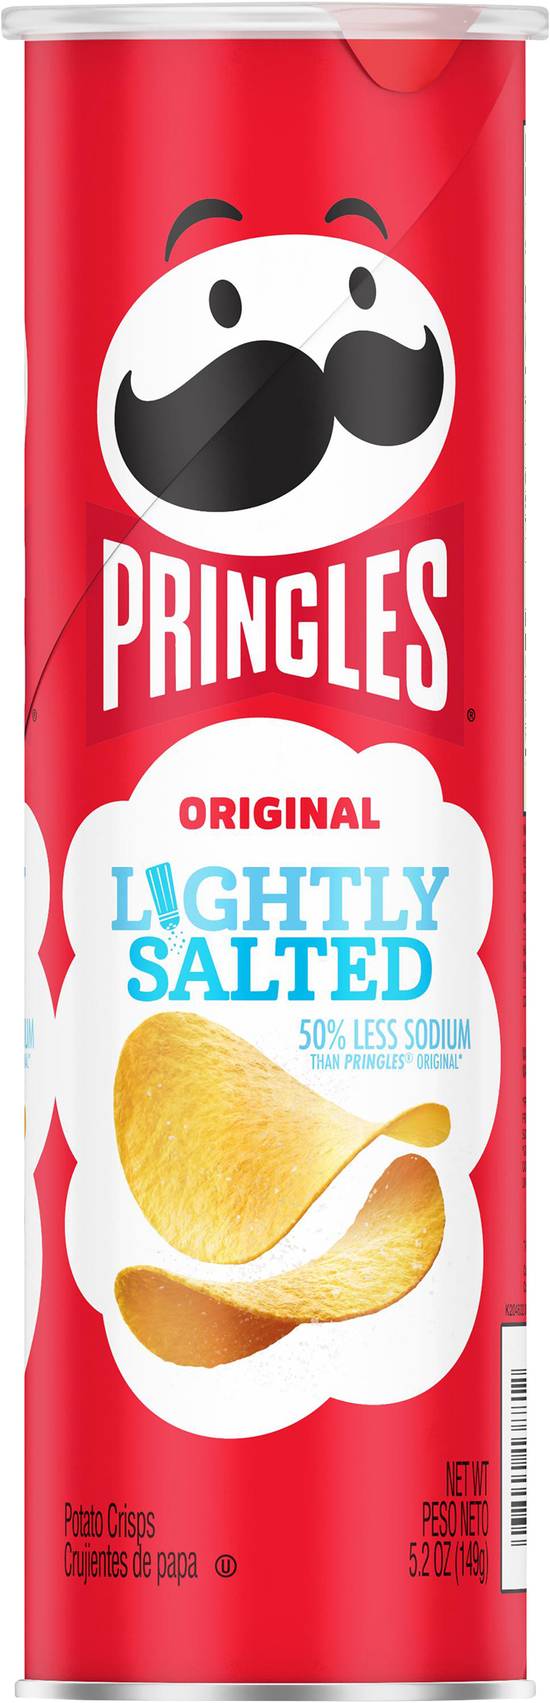 Pringles Original Lightly Salted Potato Crisps